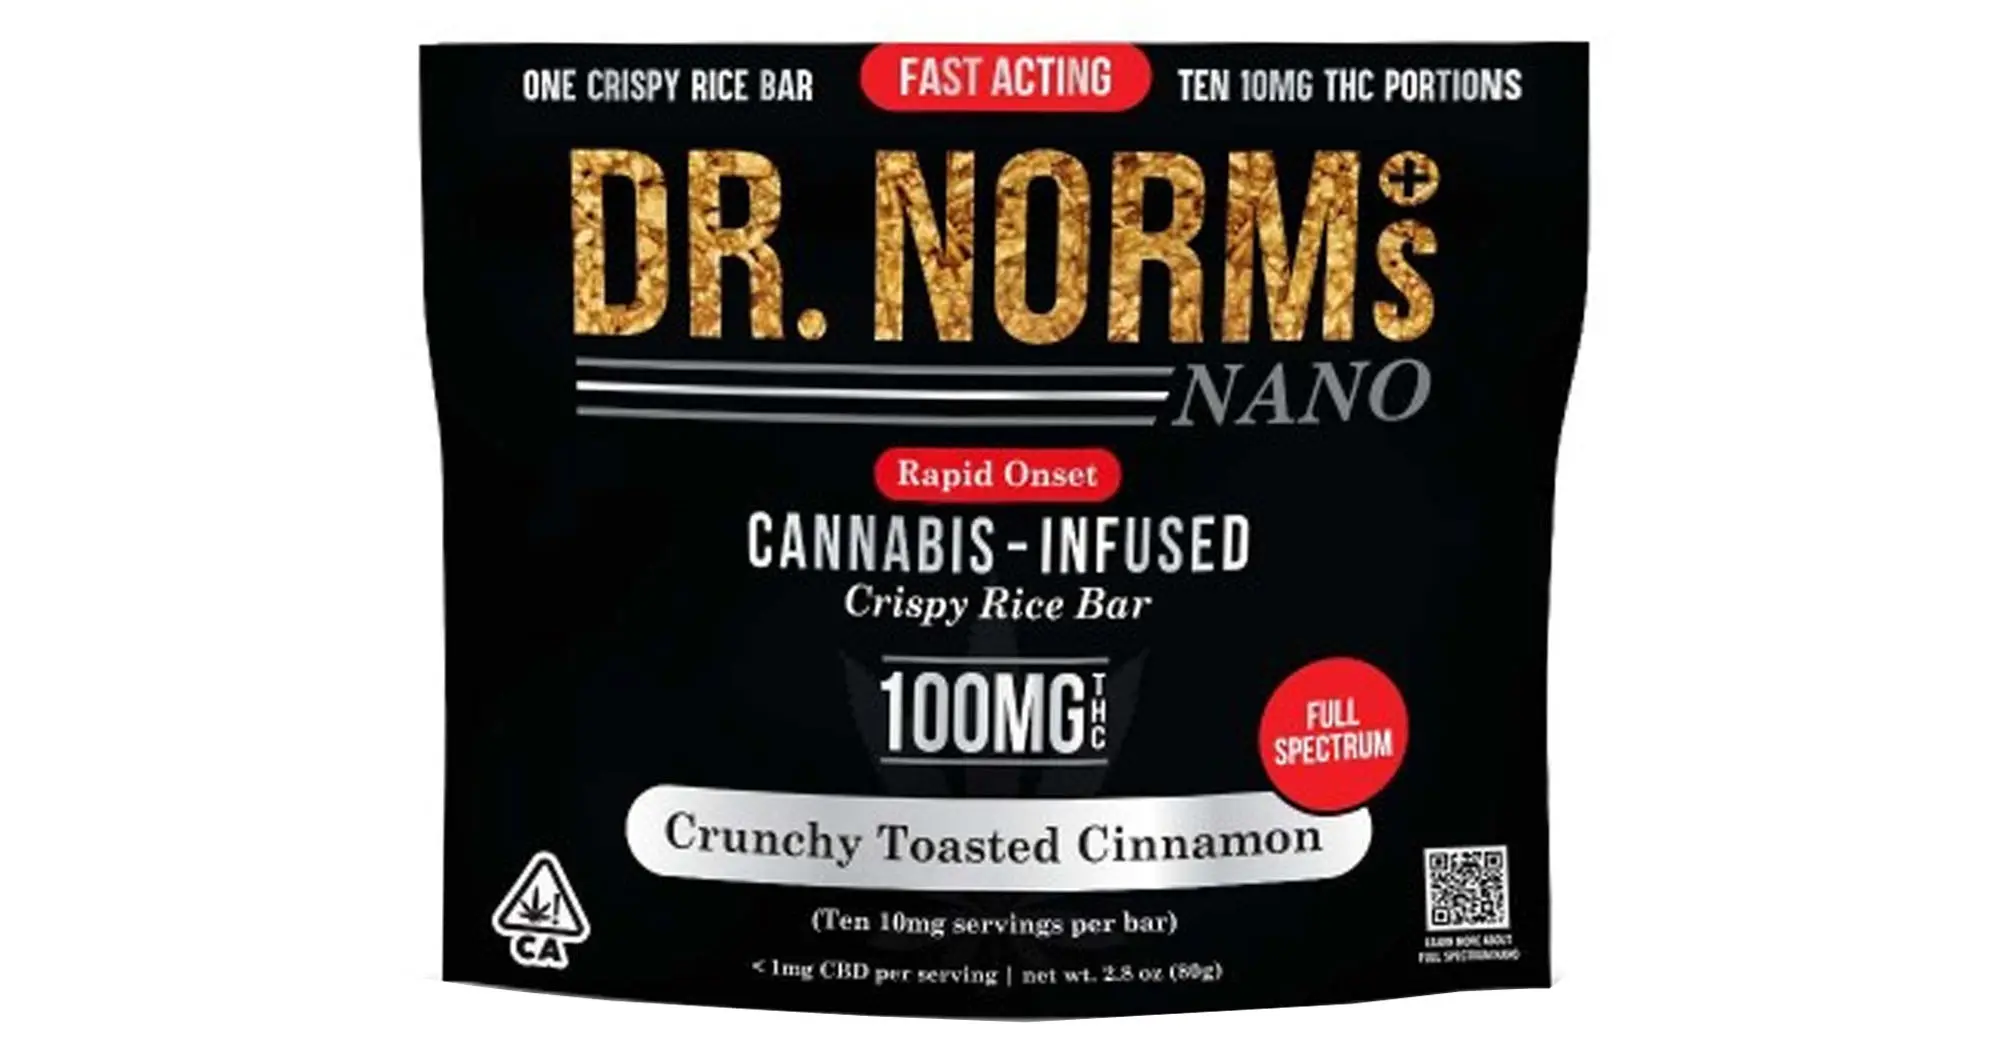 Crunchy Toasted Cinnamon NANO Rice Crispy Bar